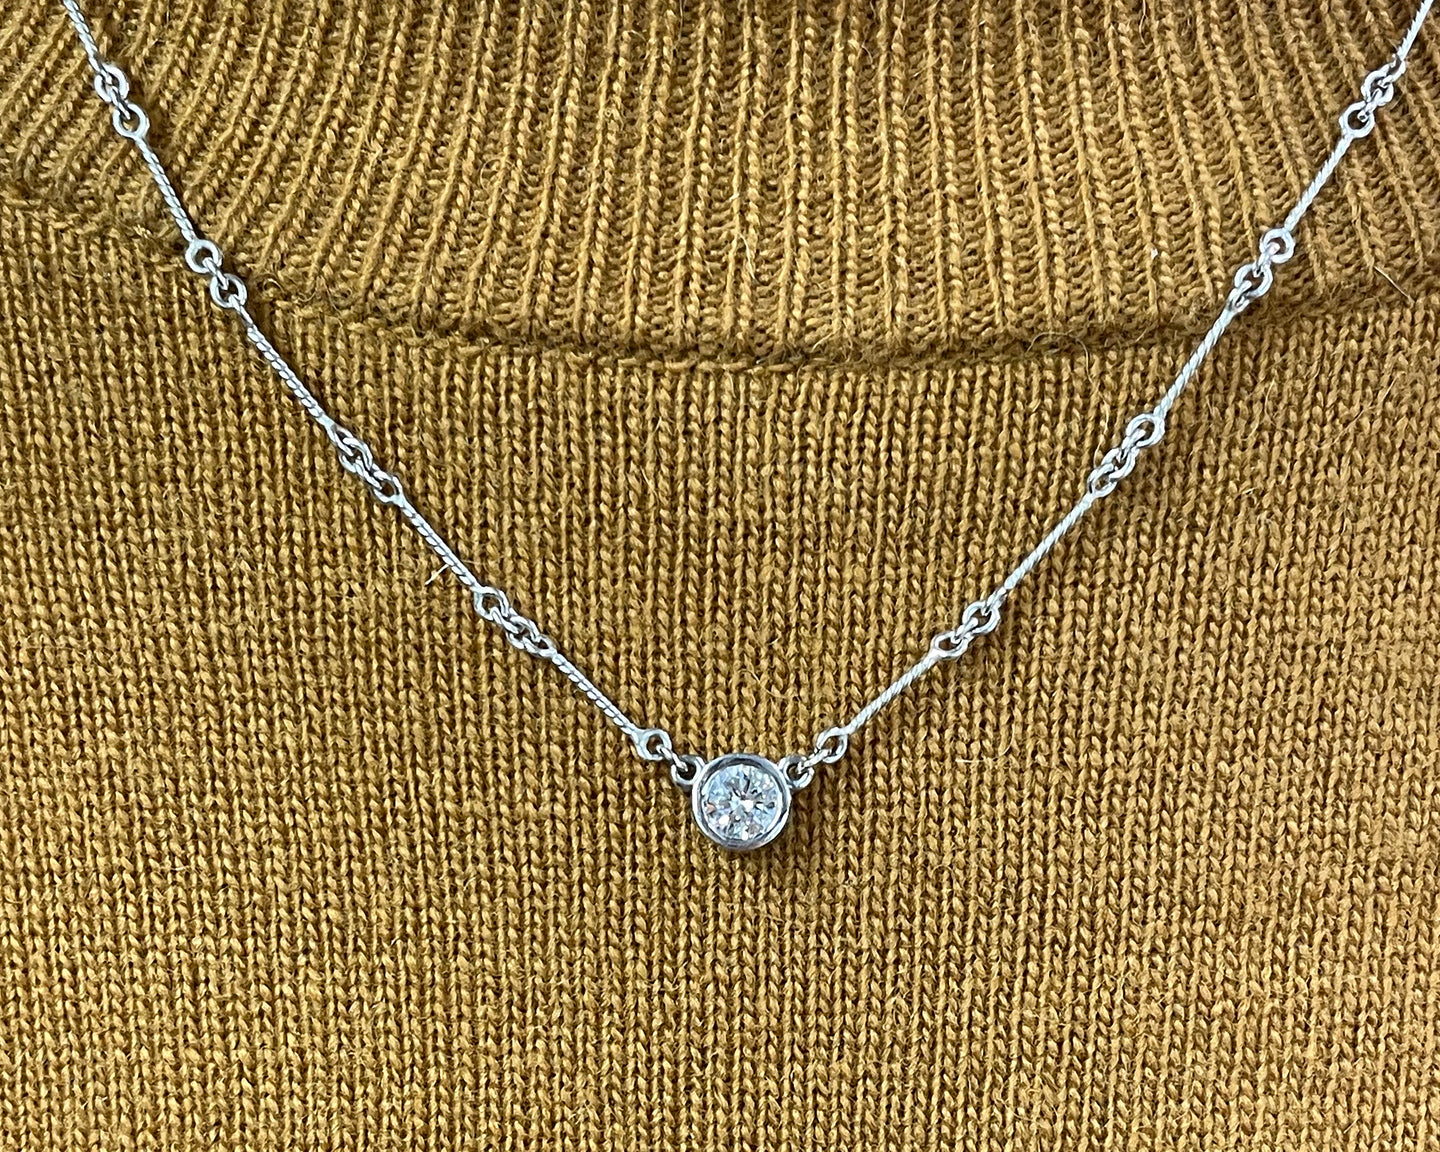 14K white gold diamond solitaire pendant necklace featuring a 0.40CTS H-I1 round brilliant cut diamond.